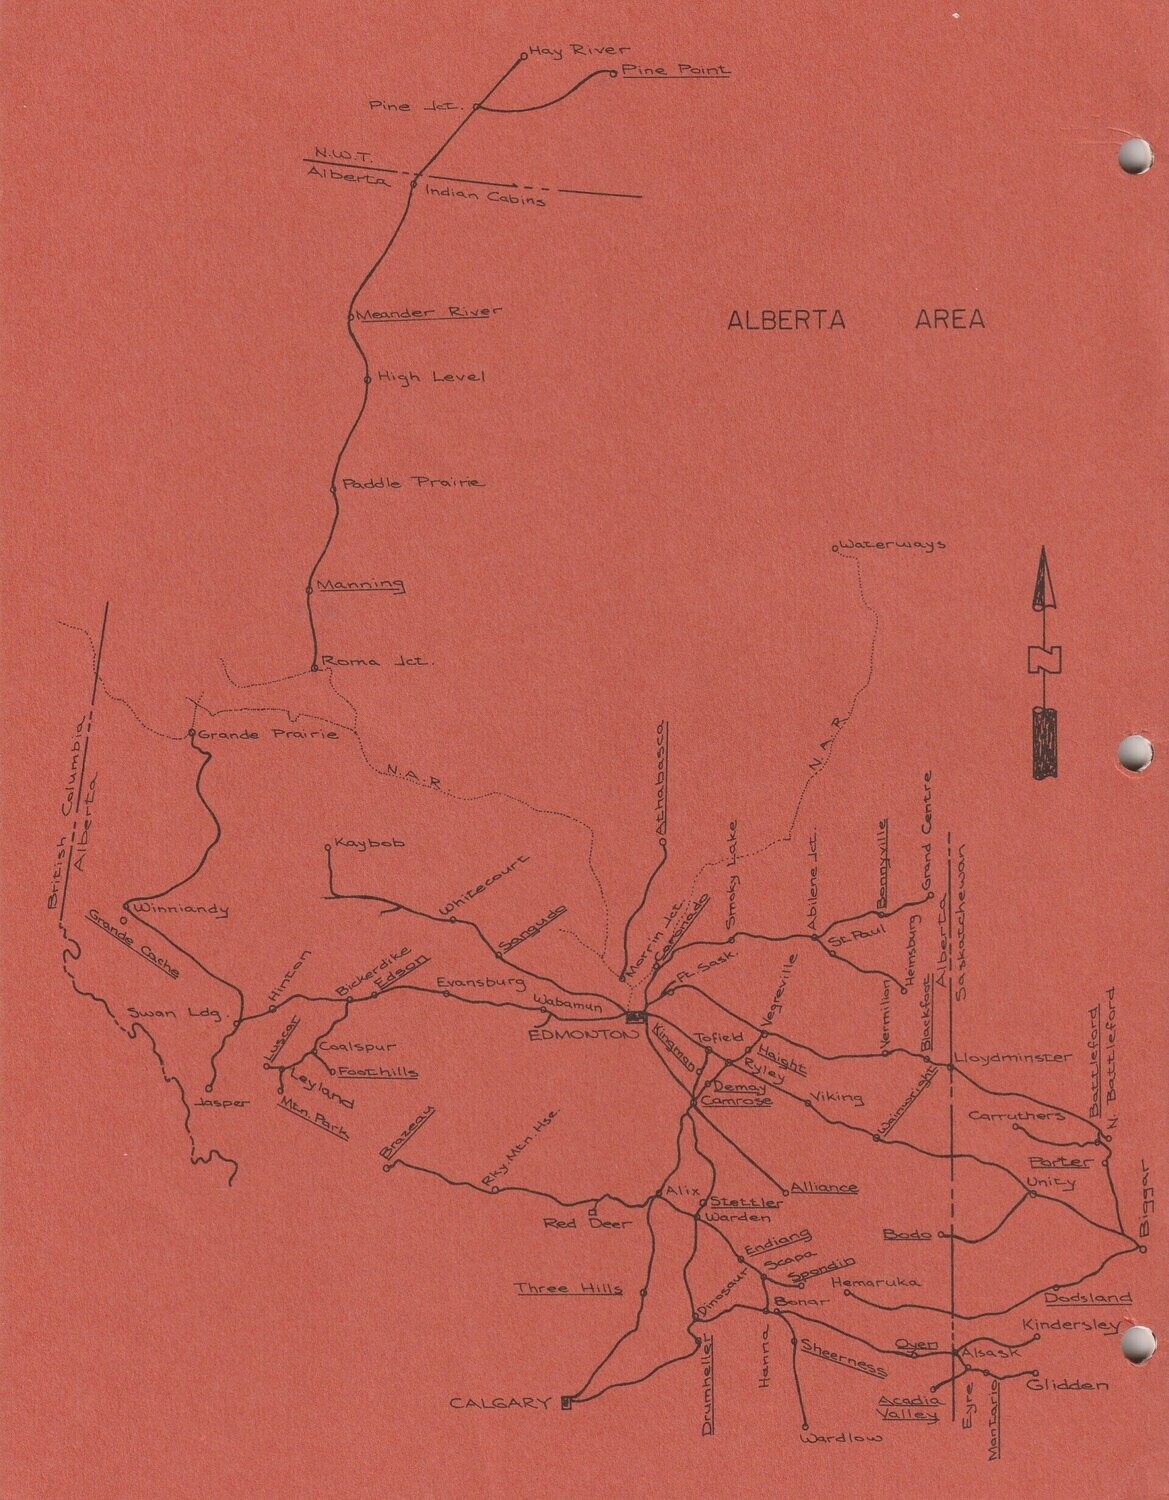 Canadian National Alberta Area map 1974